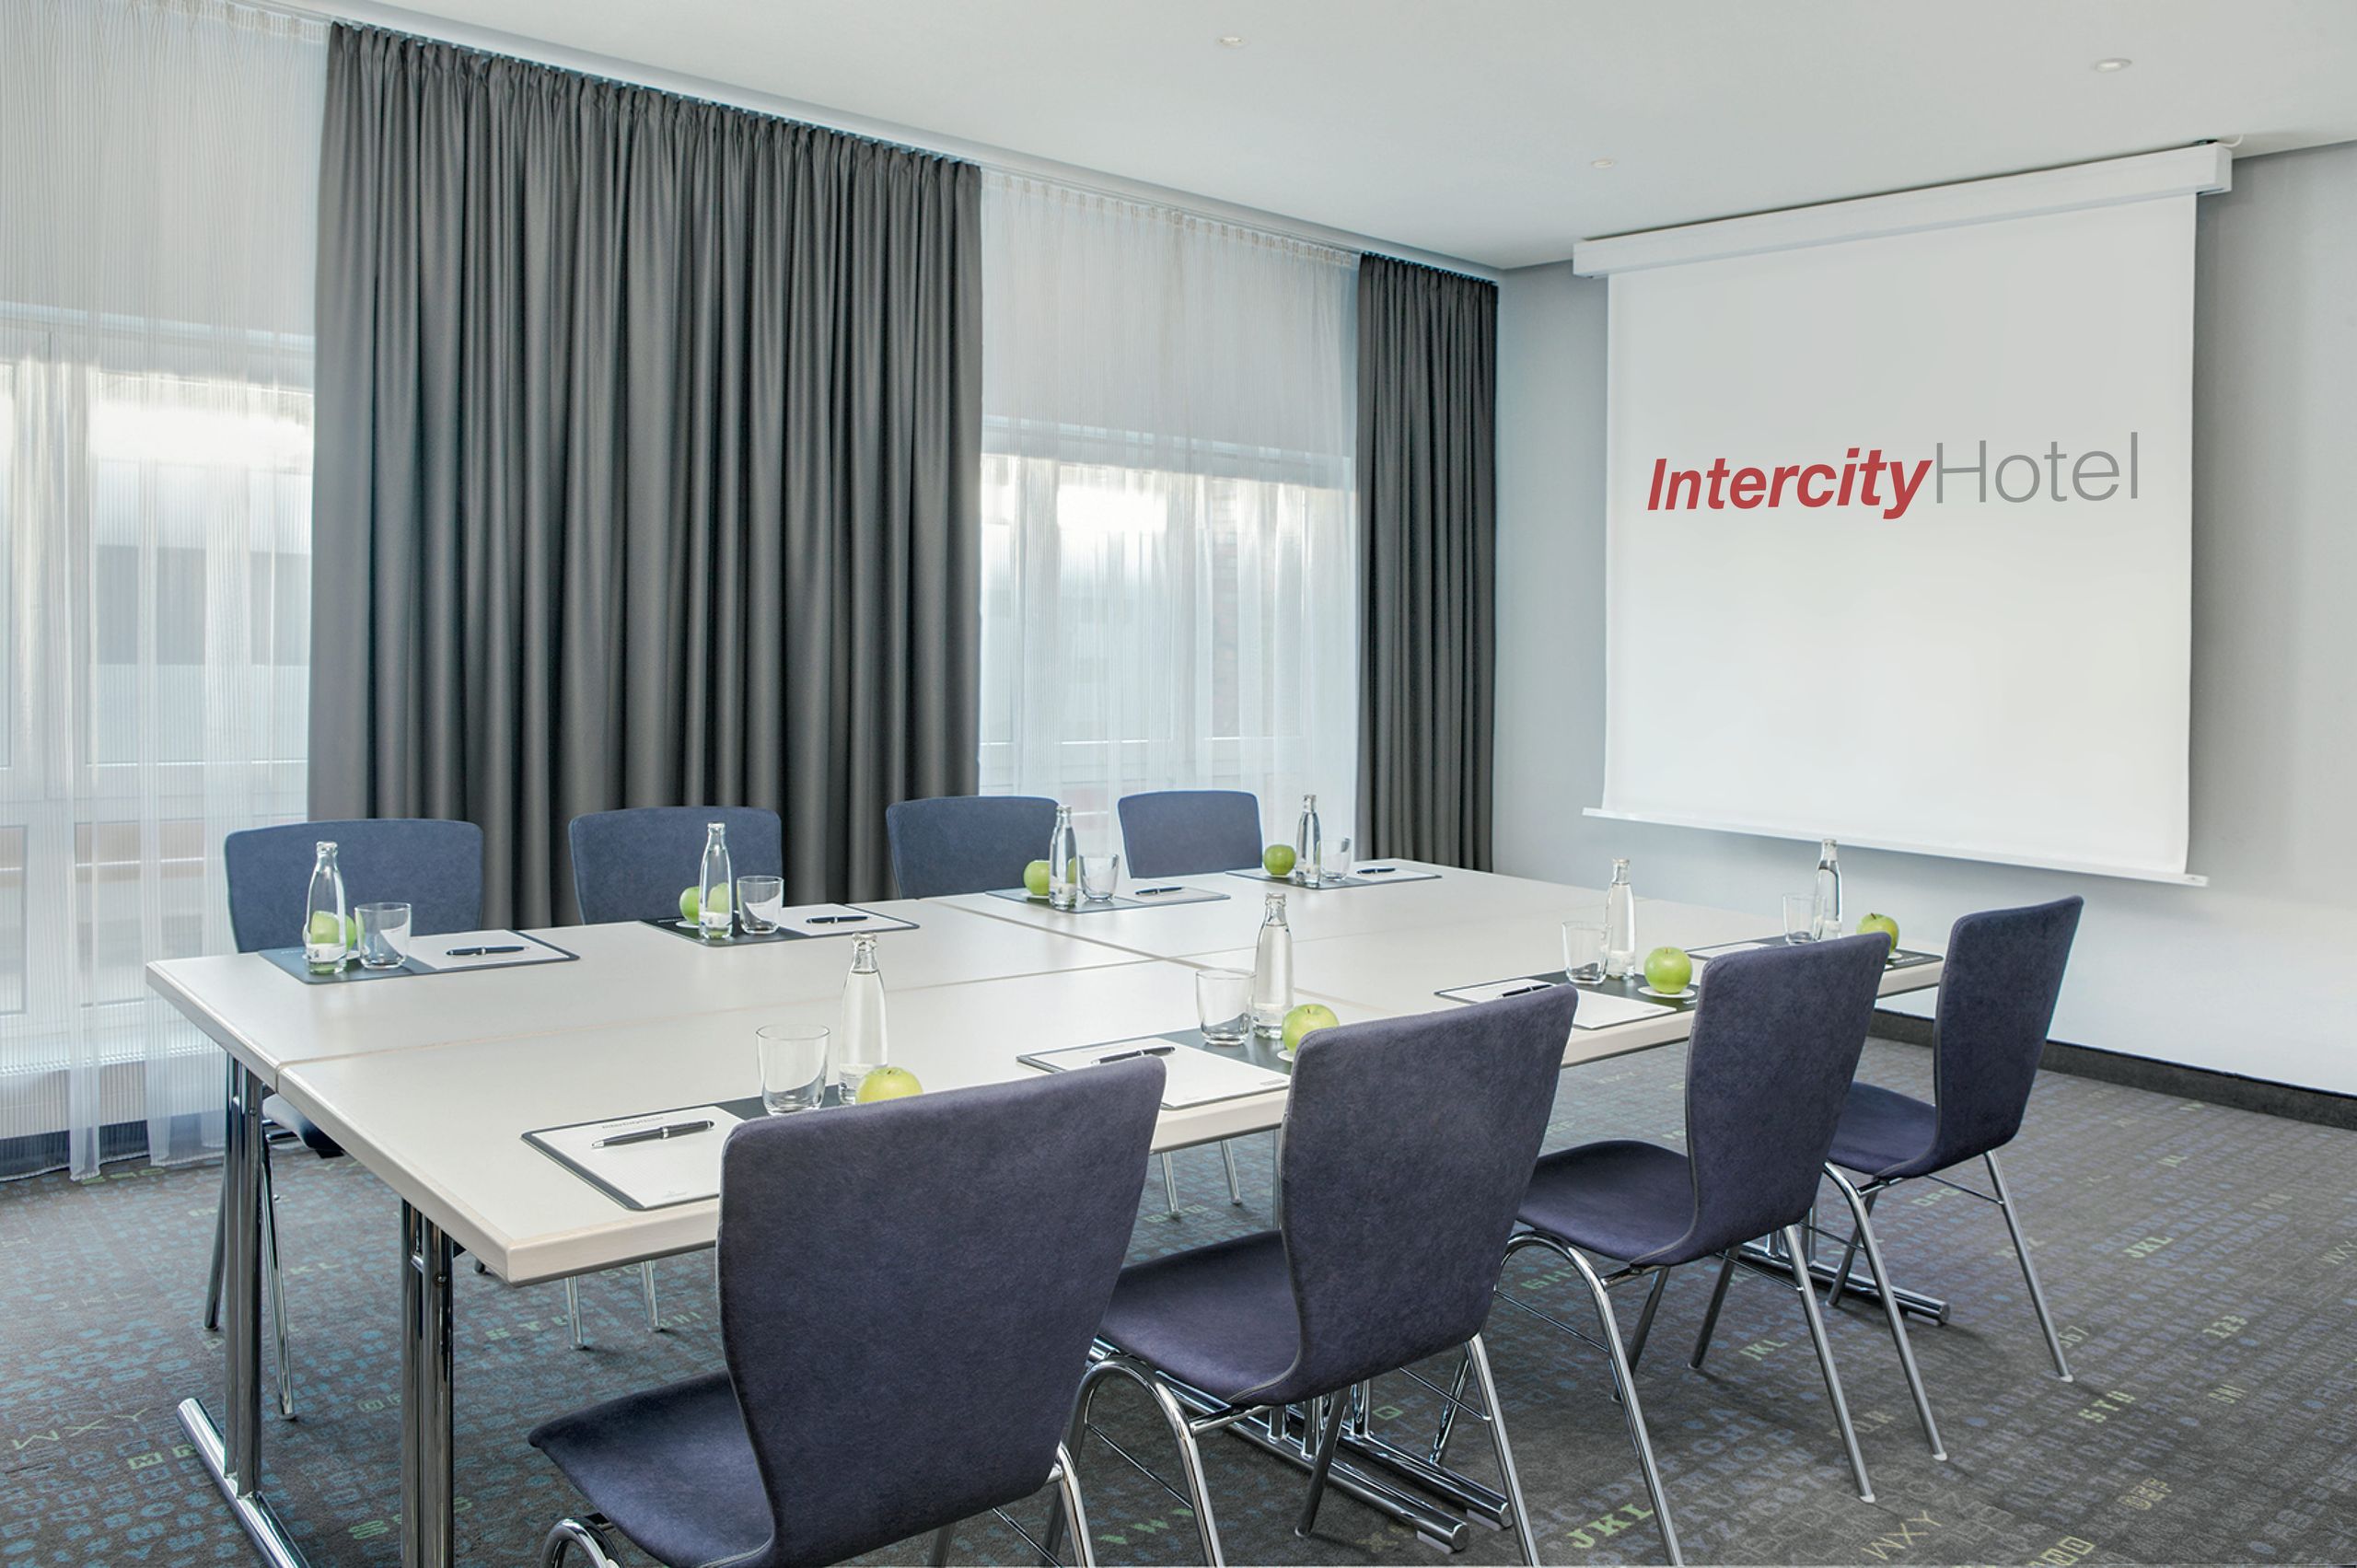 IntercityHotel Hamburg-Altona - Meetings & Events